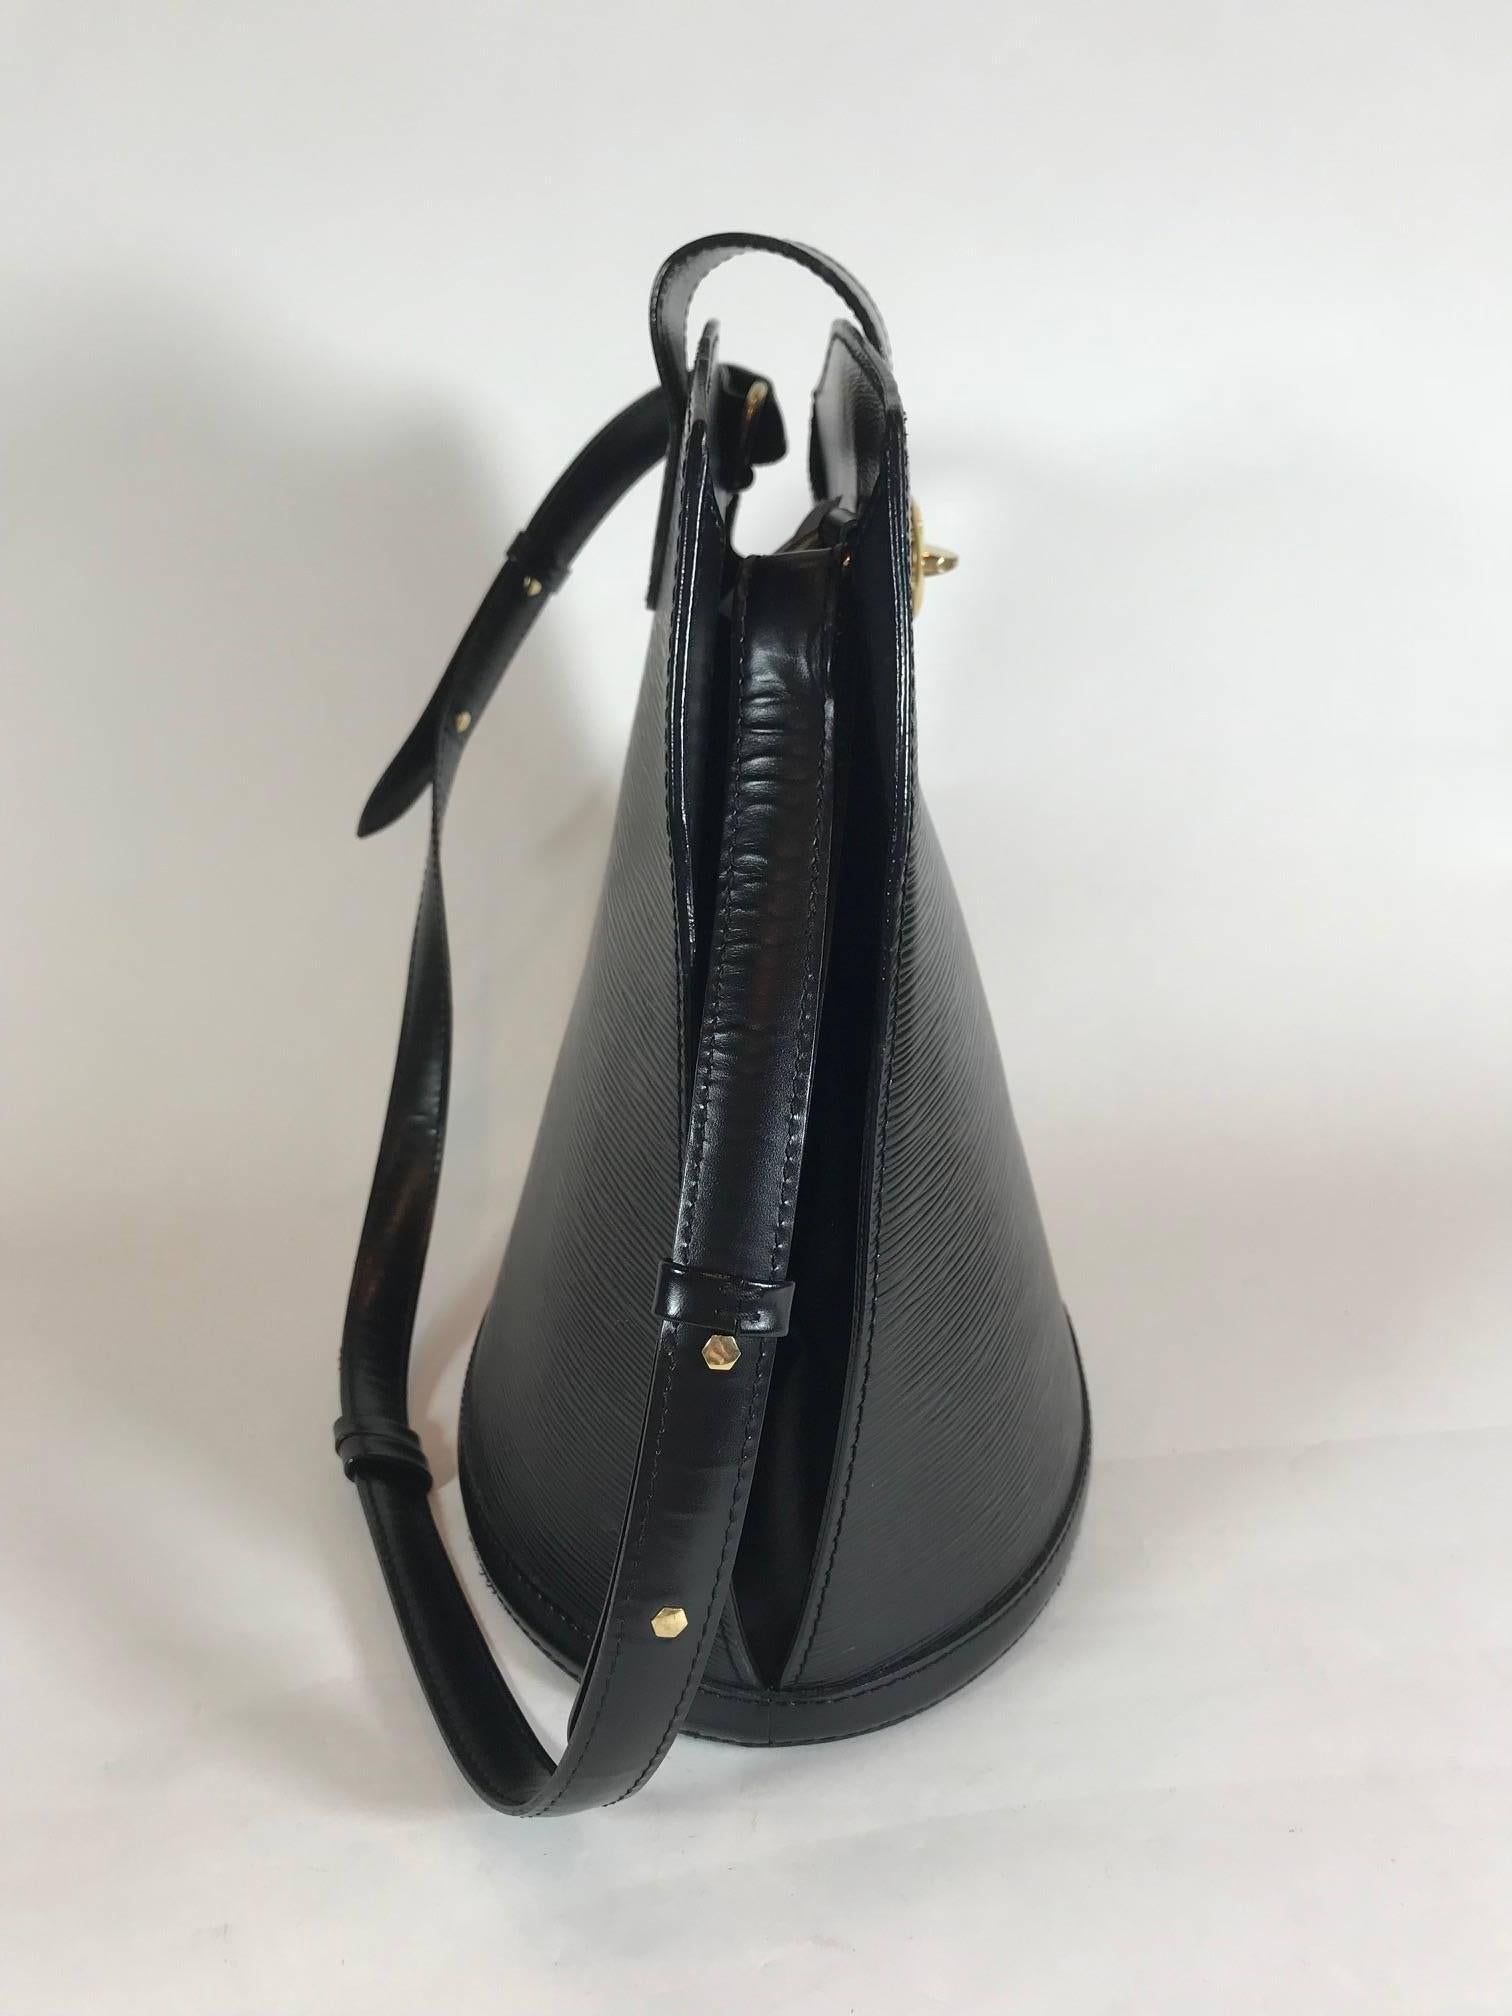 Louis Vuitton Noir Epi leather. Brass hardware. Turn-lock closure. Single flat adjustable shoulder strap. Single slit pocket at interior wall.
